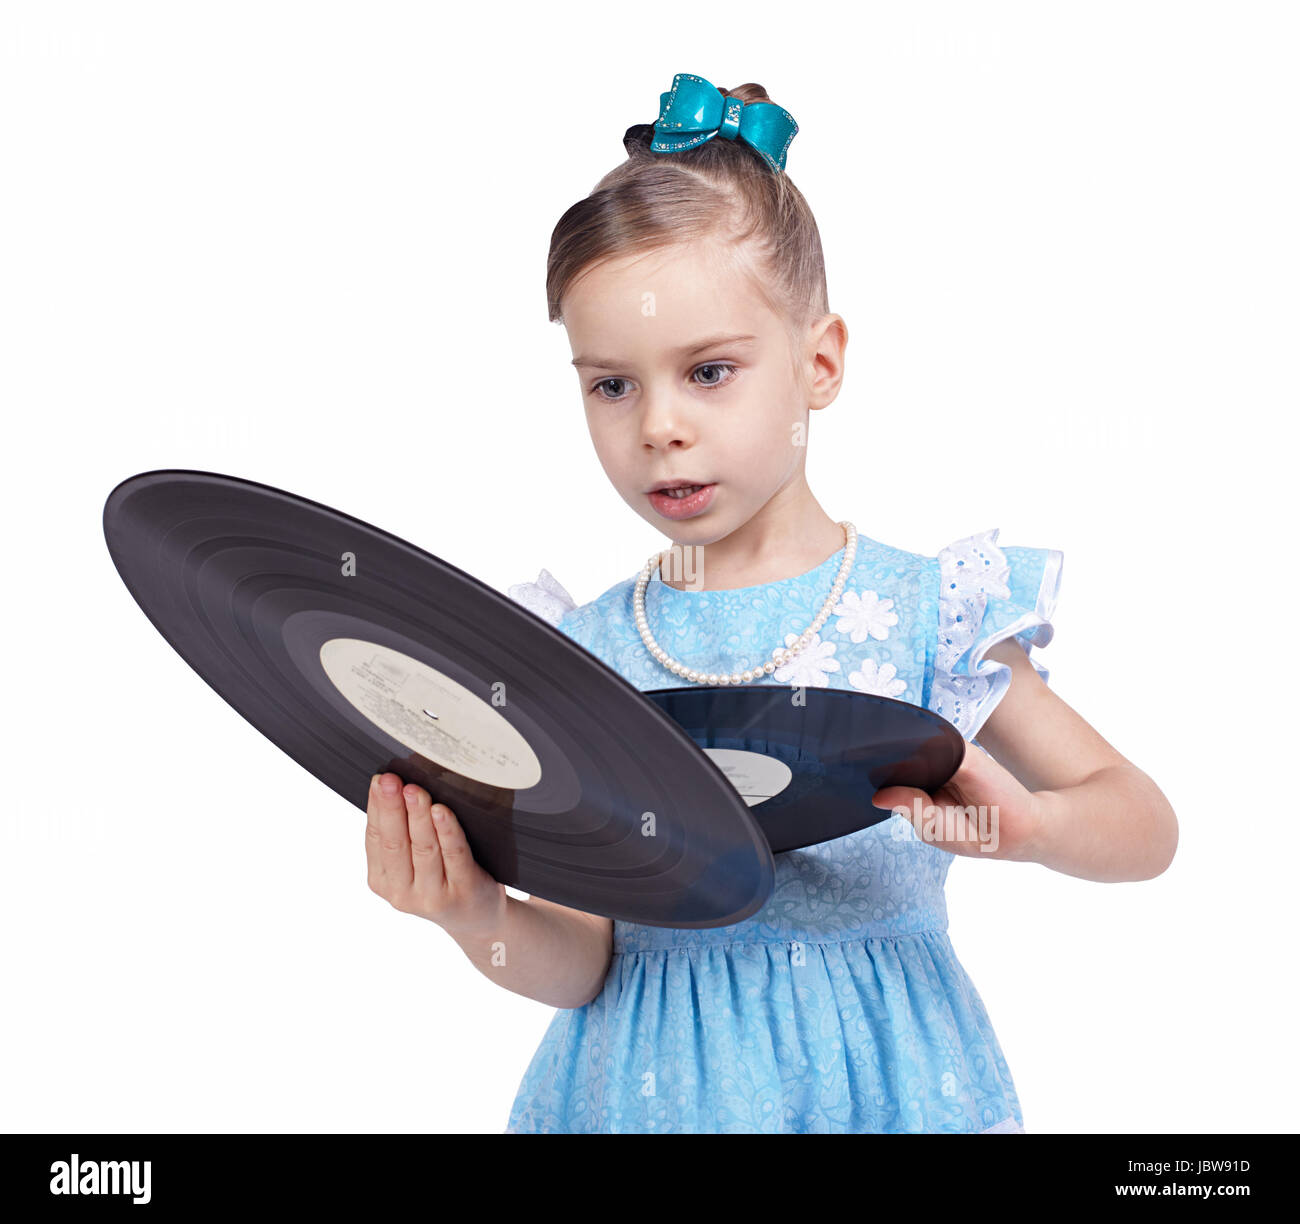 Little girl looks at vinyl records Stock Photo